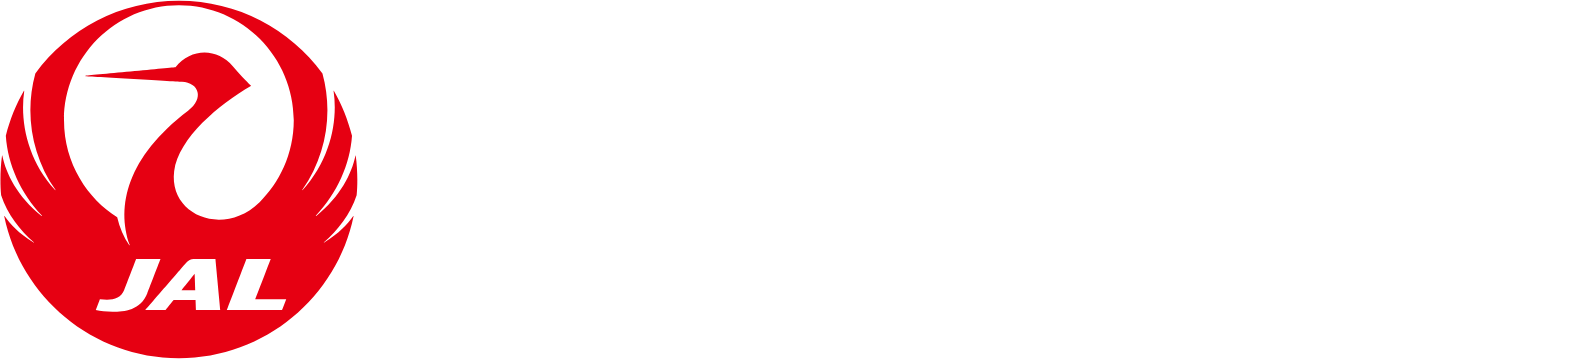 Japan Airlines
 Logo groß für dunkle Hintergründe (transparentes PNG)